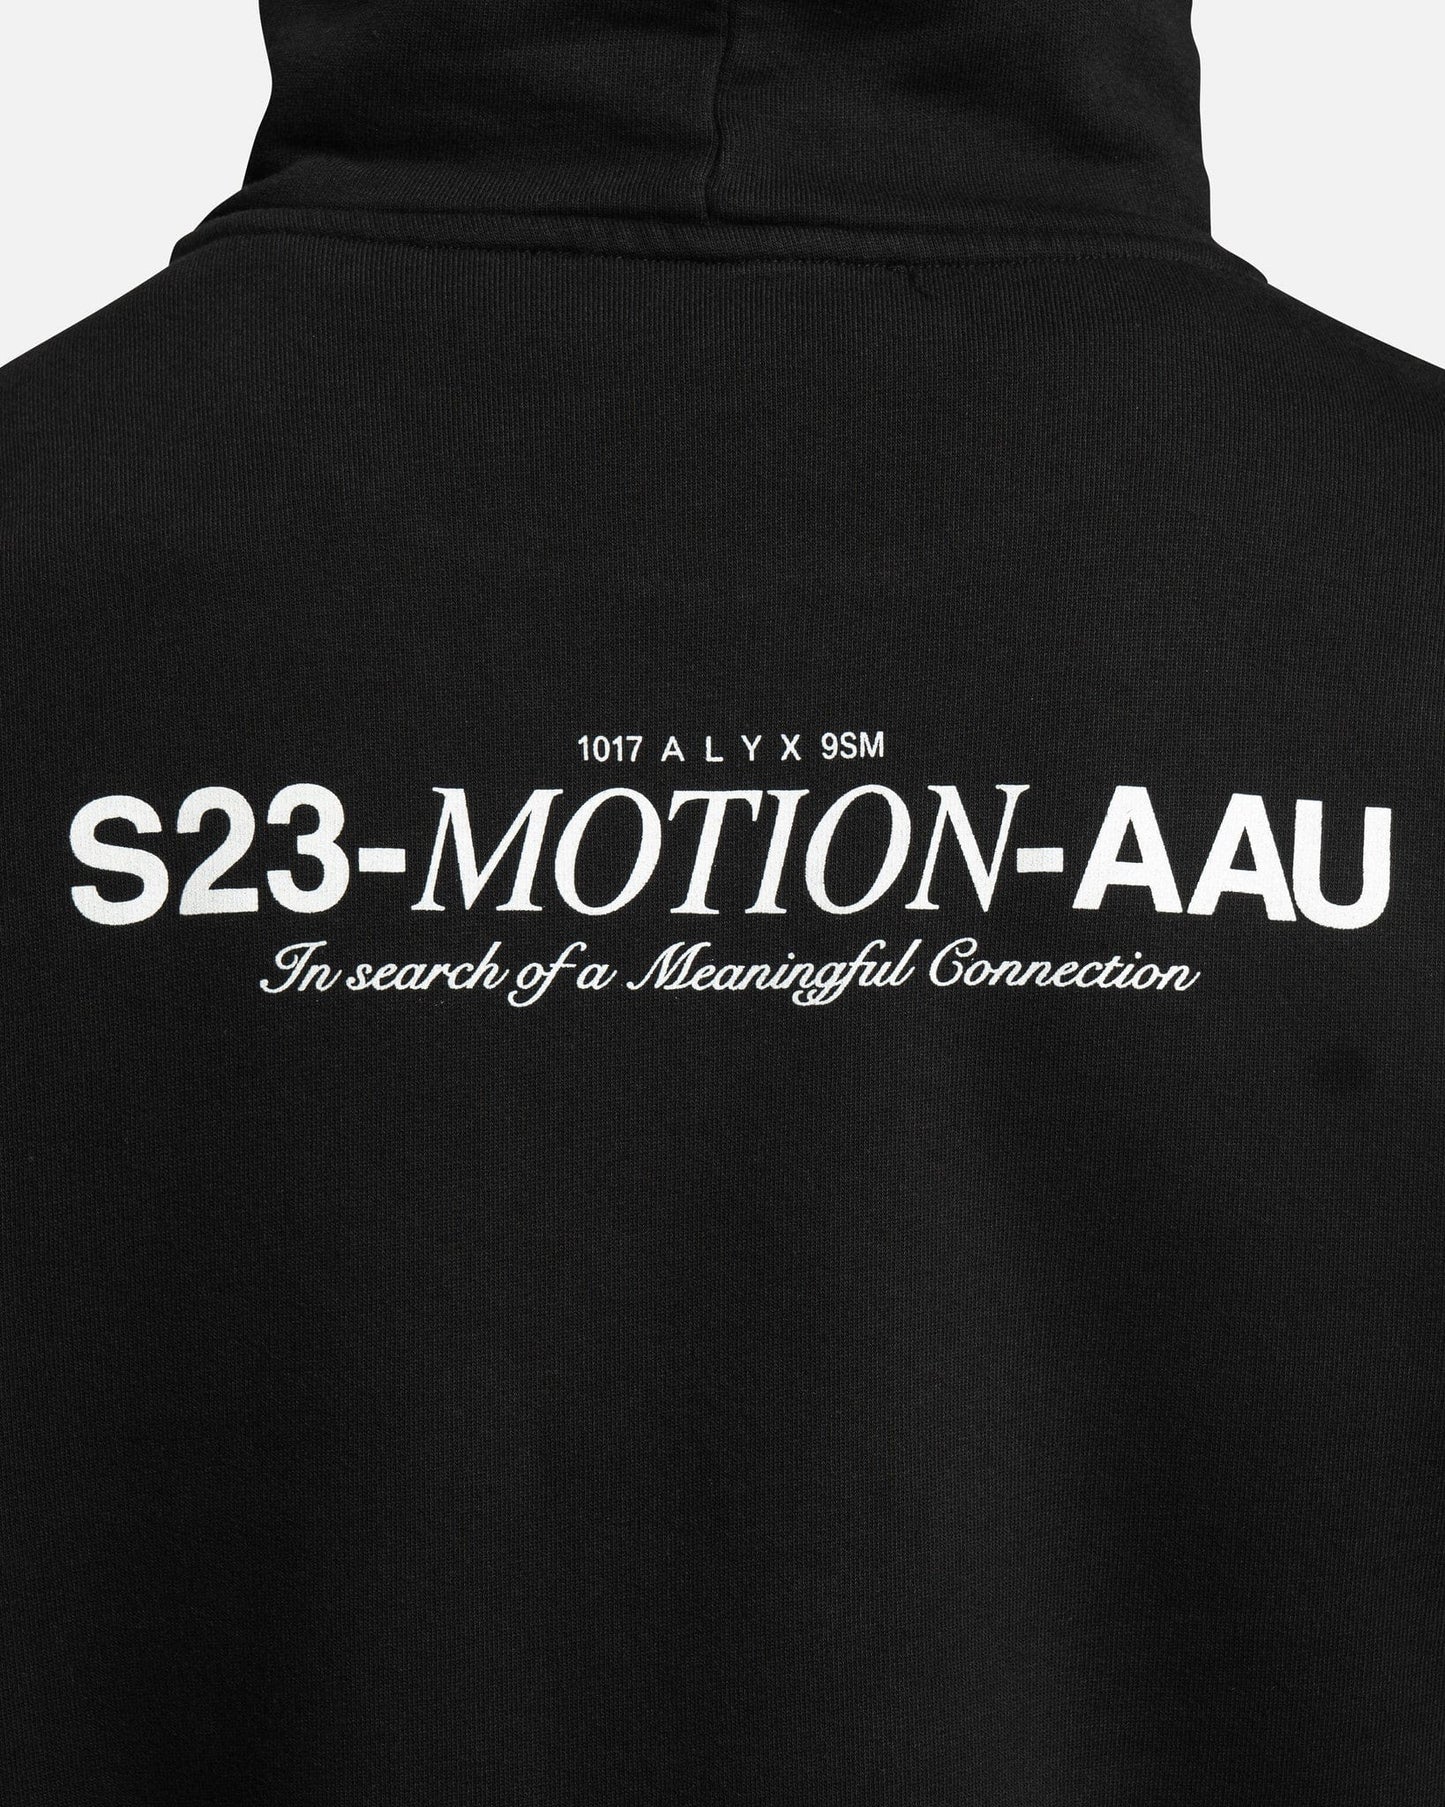 1017 ALYX 9SM Men's Sweatshirts Collection Logo Hoodie in Black